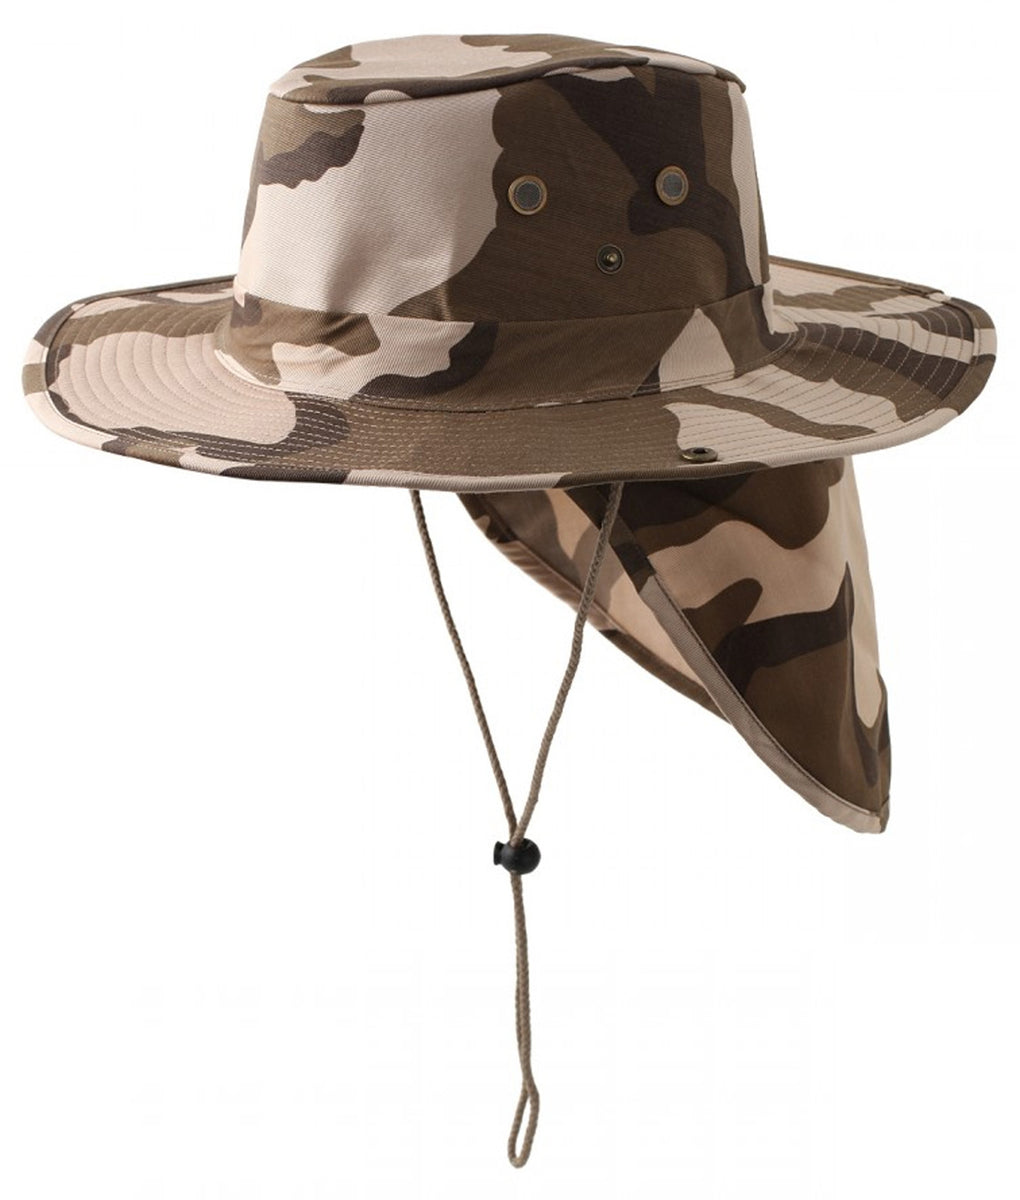 Safari Boonie Fishing Sun Hat Cotton Blend - Desert Camouflage Camo Small